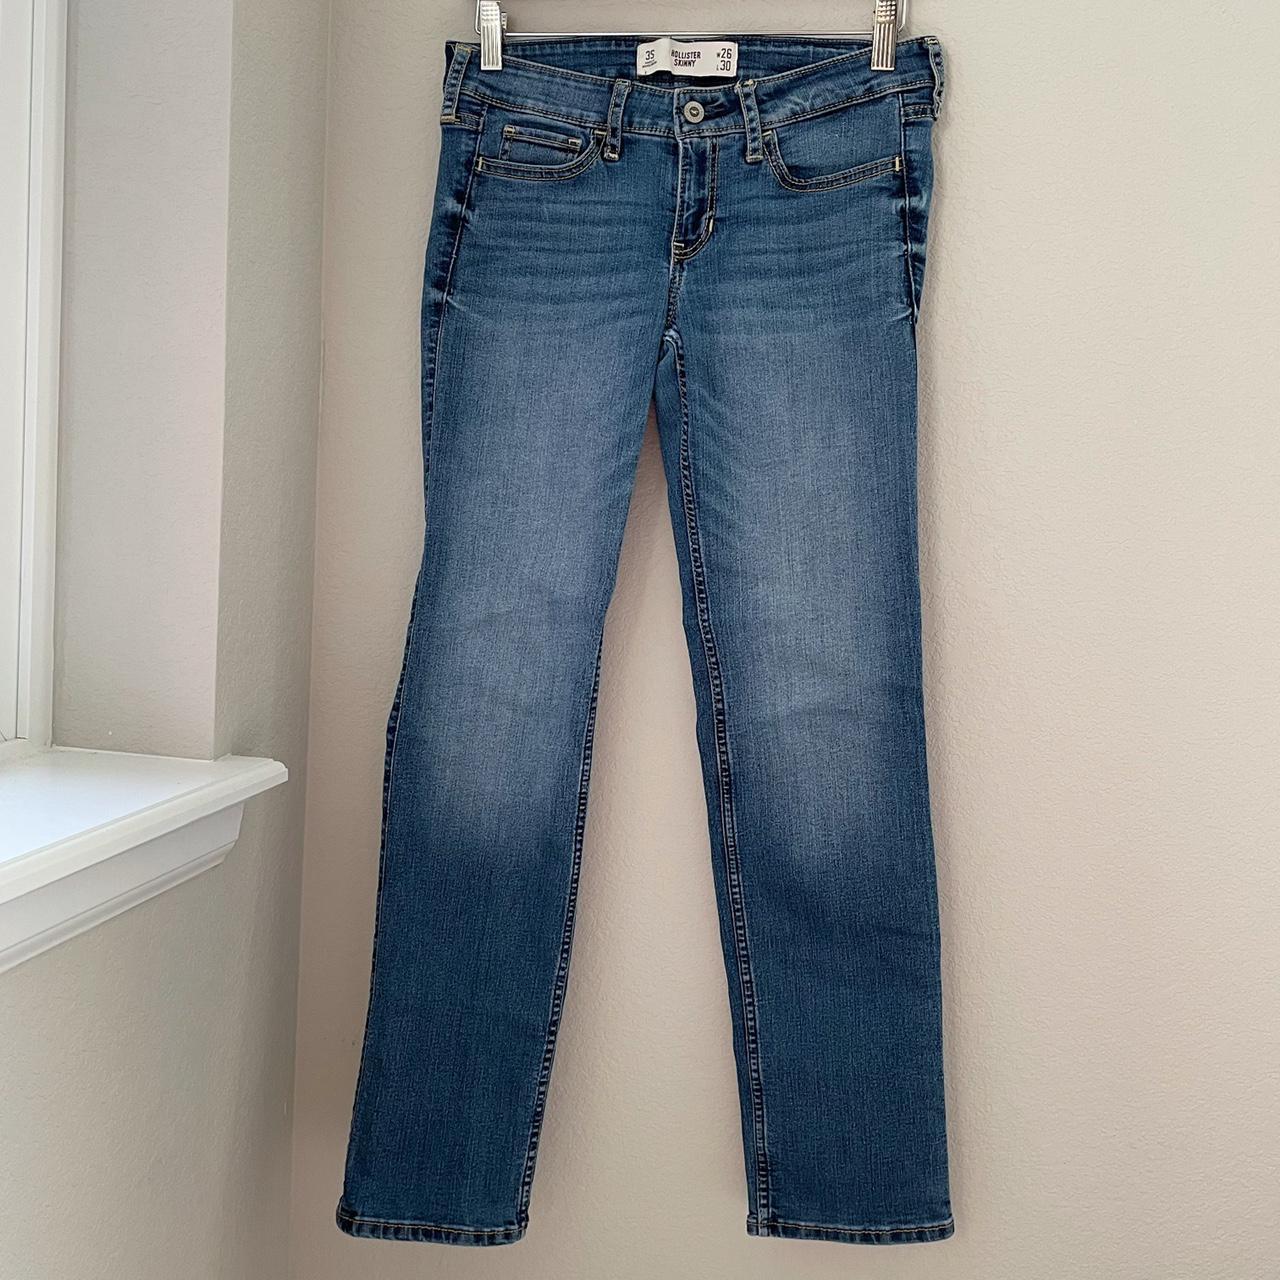 HOLLISTER • Jeans, W26 L30 – WASHED + WORN